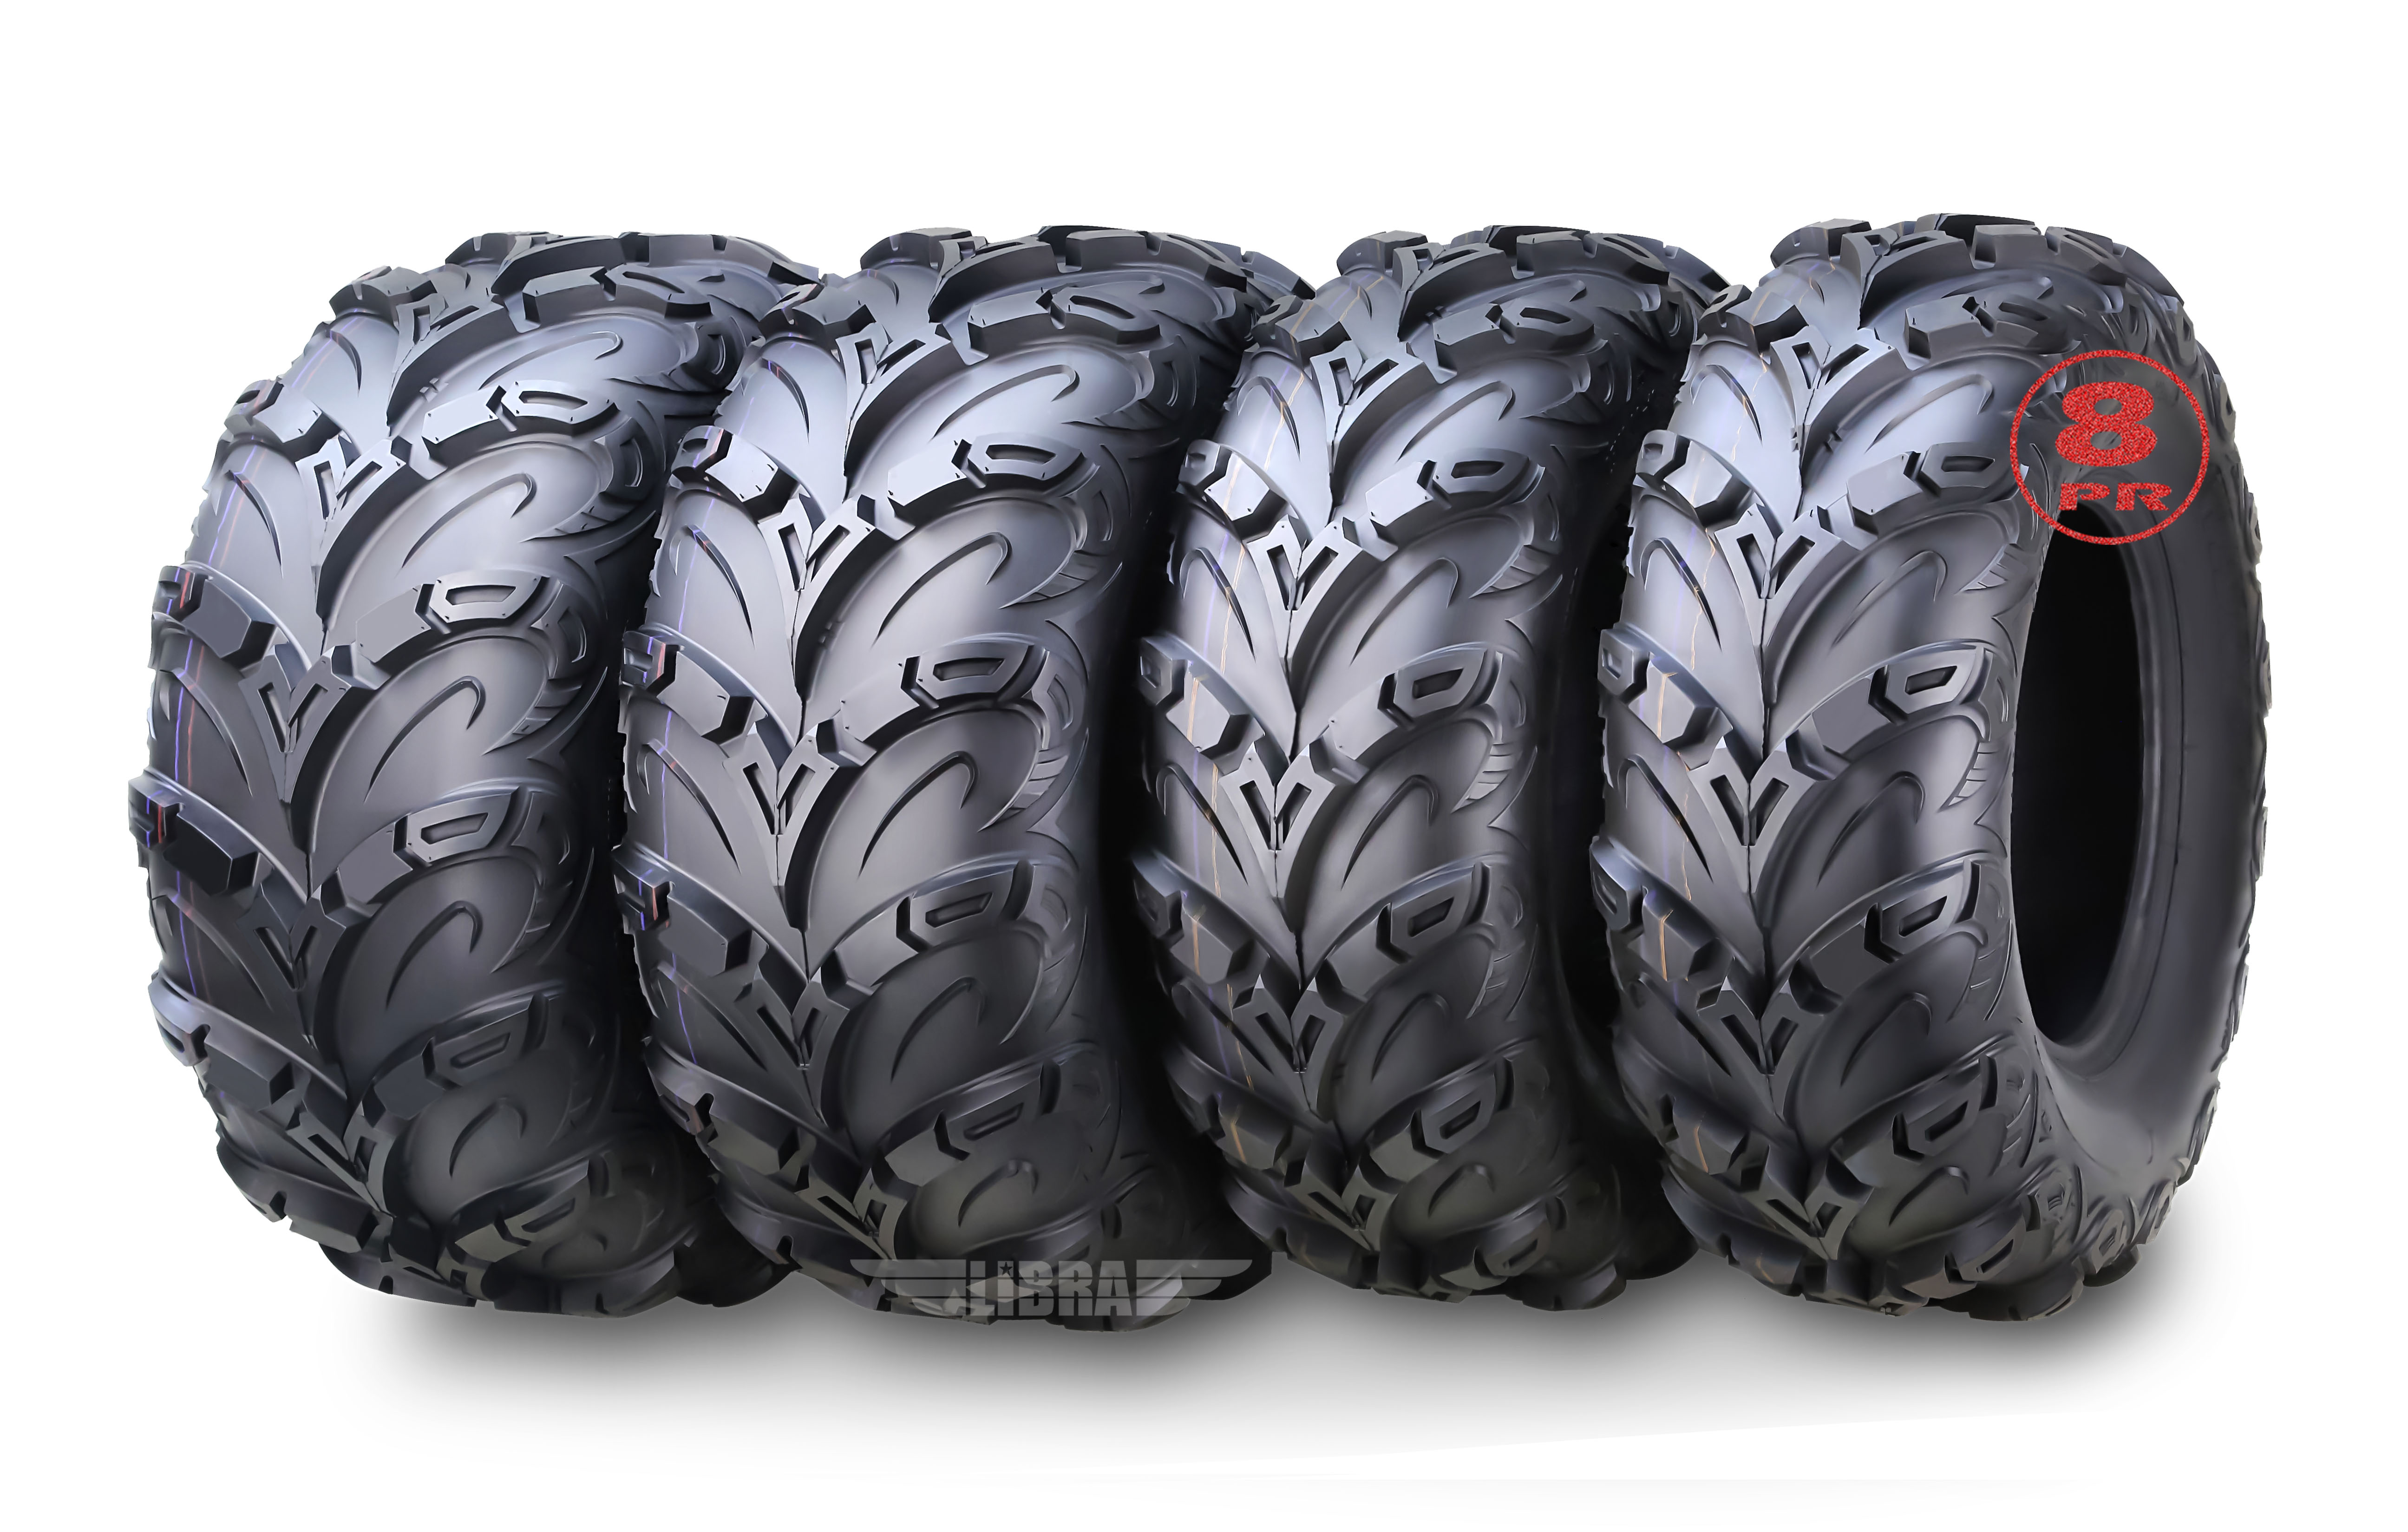 Best Vizzoni Tires For Mud. 6 Rugged Vizzoni Mud Tire Options